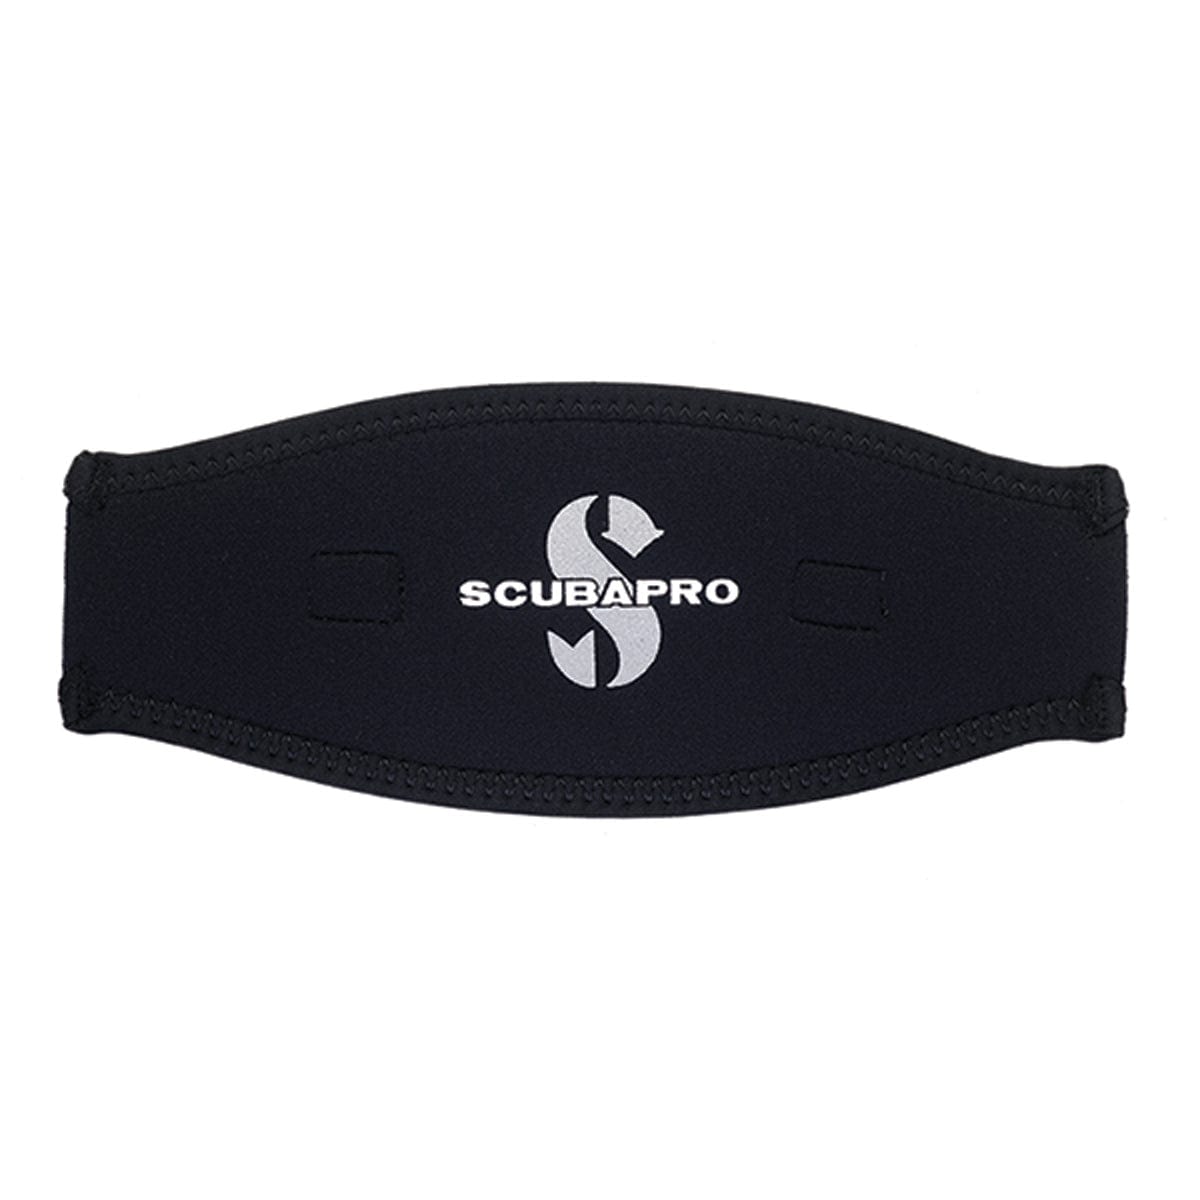 Scubapro Neoprene Mask Strap 2.5MM - Black/Black - 3